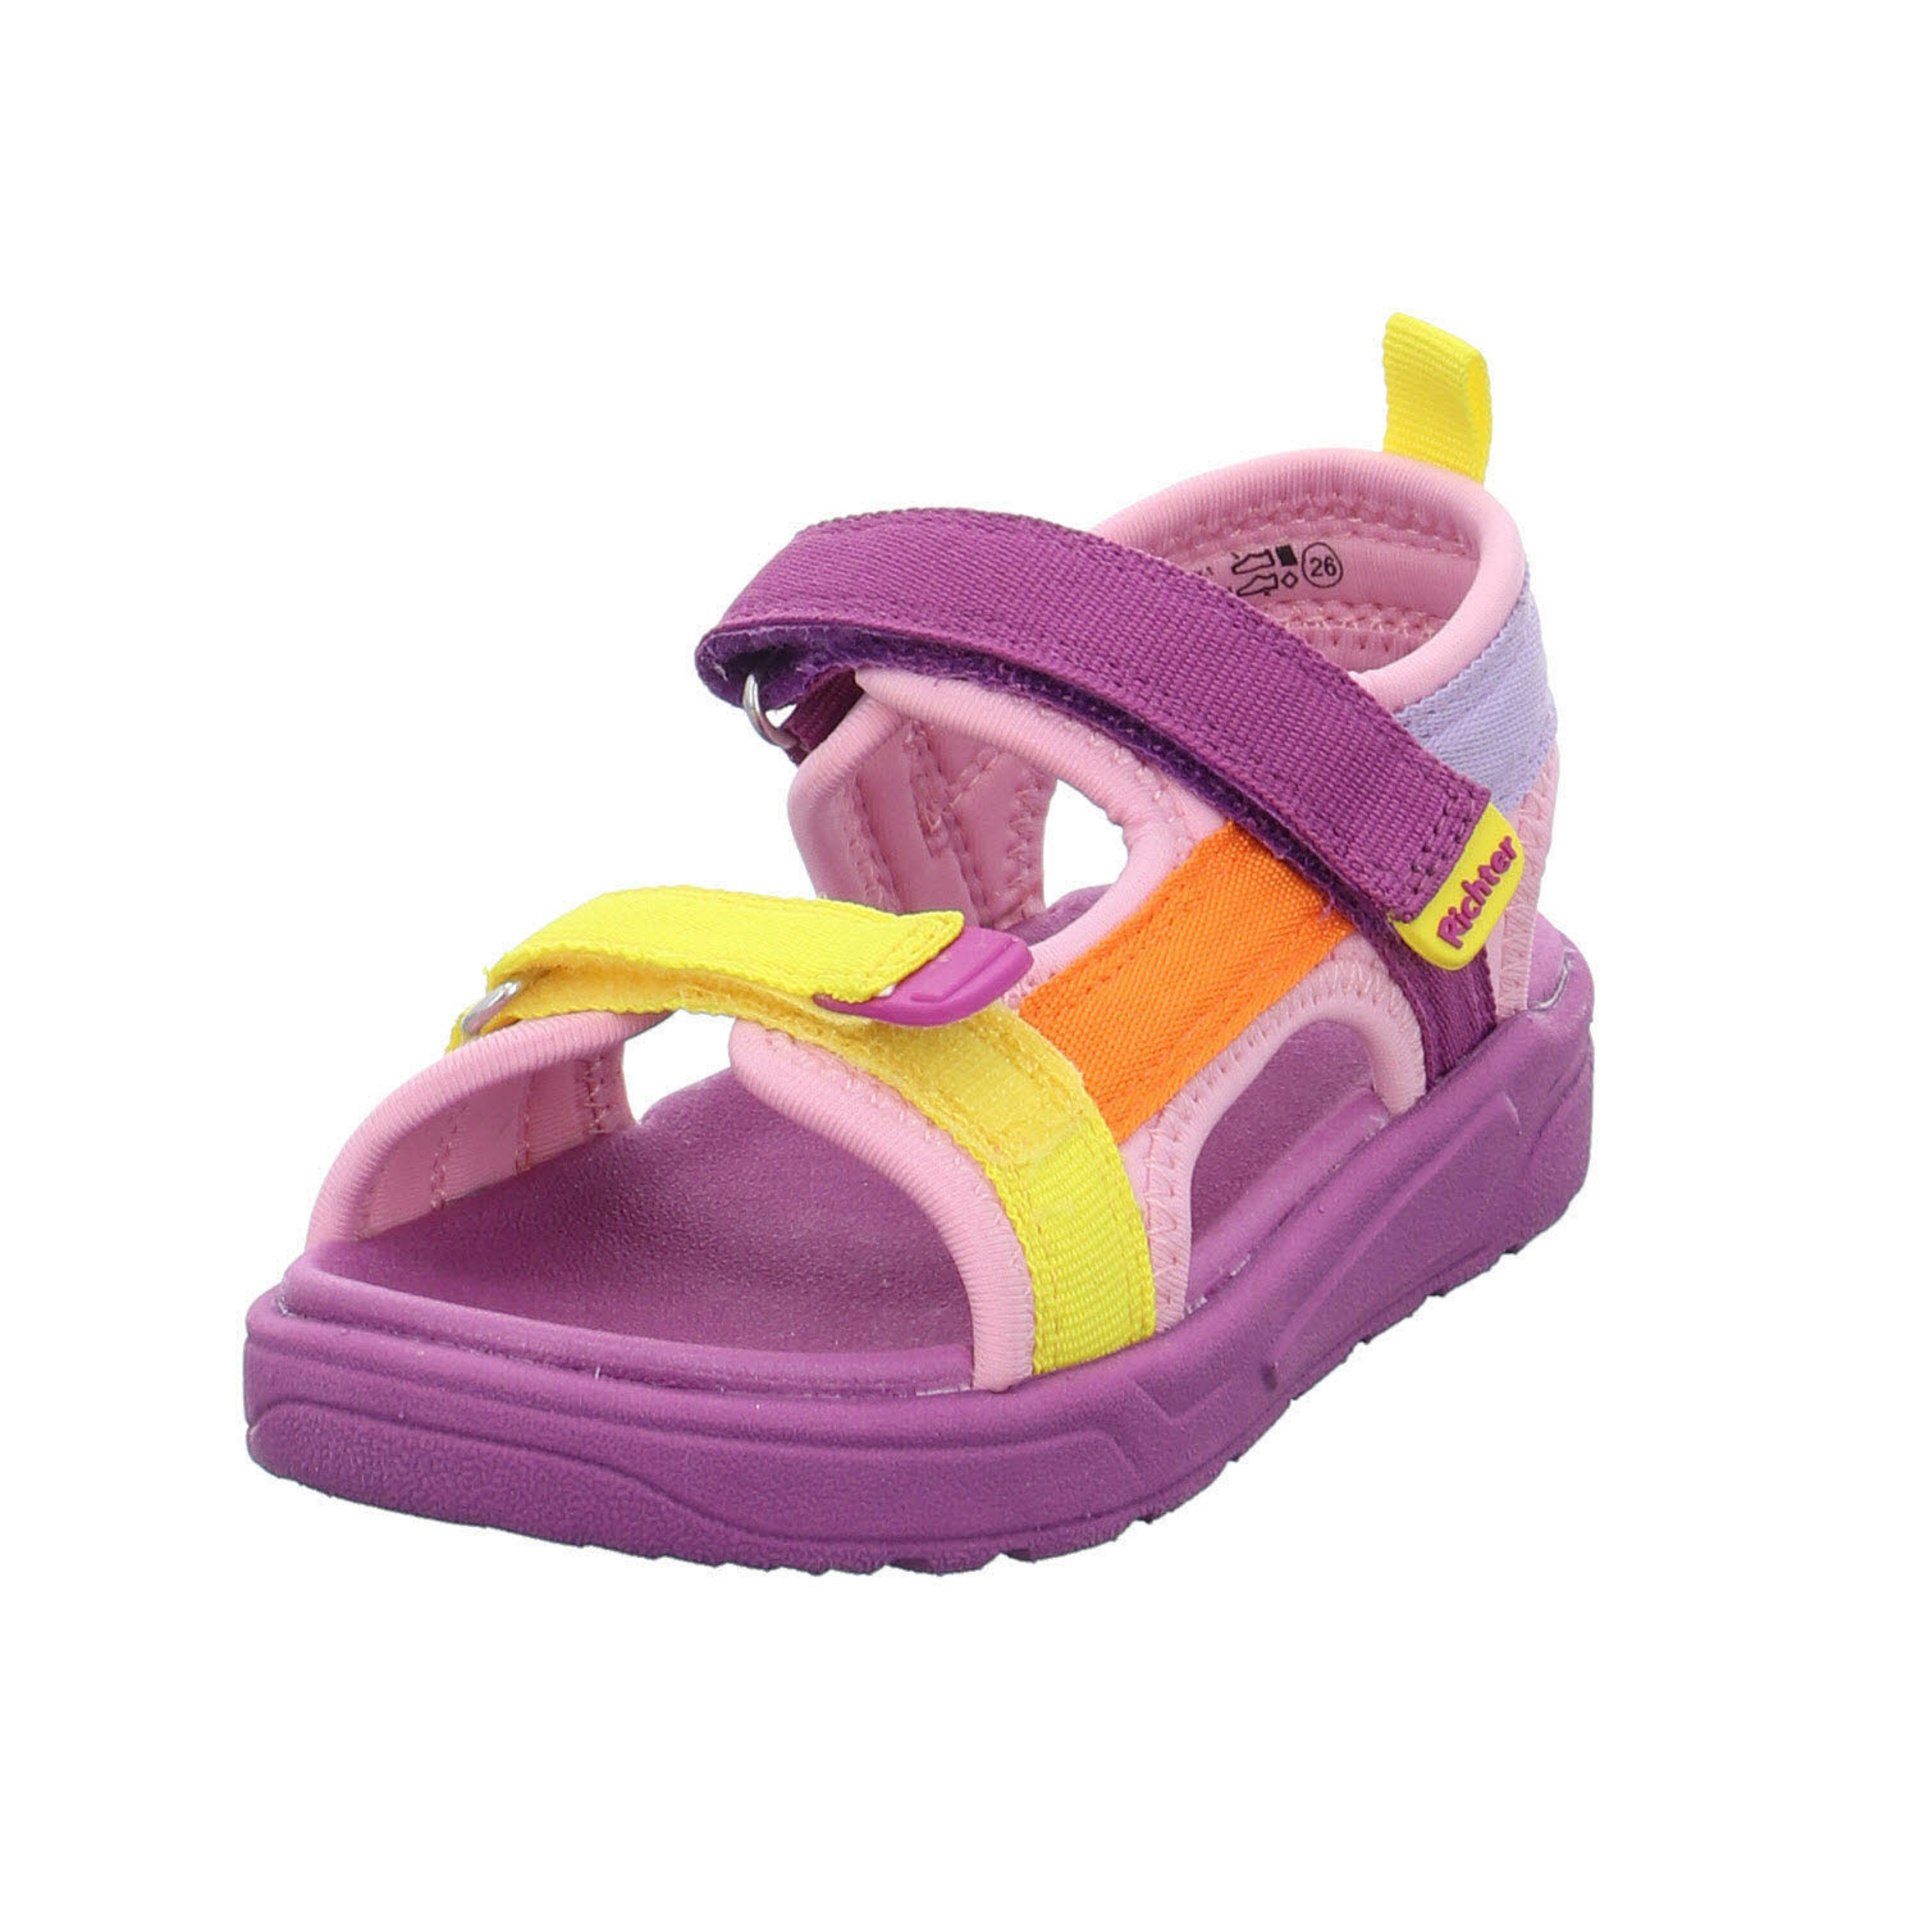 Richter Mädchen Sandalen Schuhe Sandale Kinderschuhe Sandale Textil pink/pine